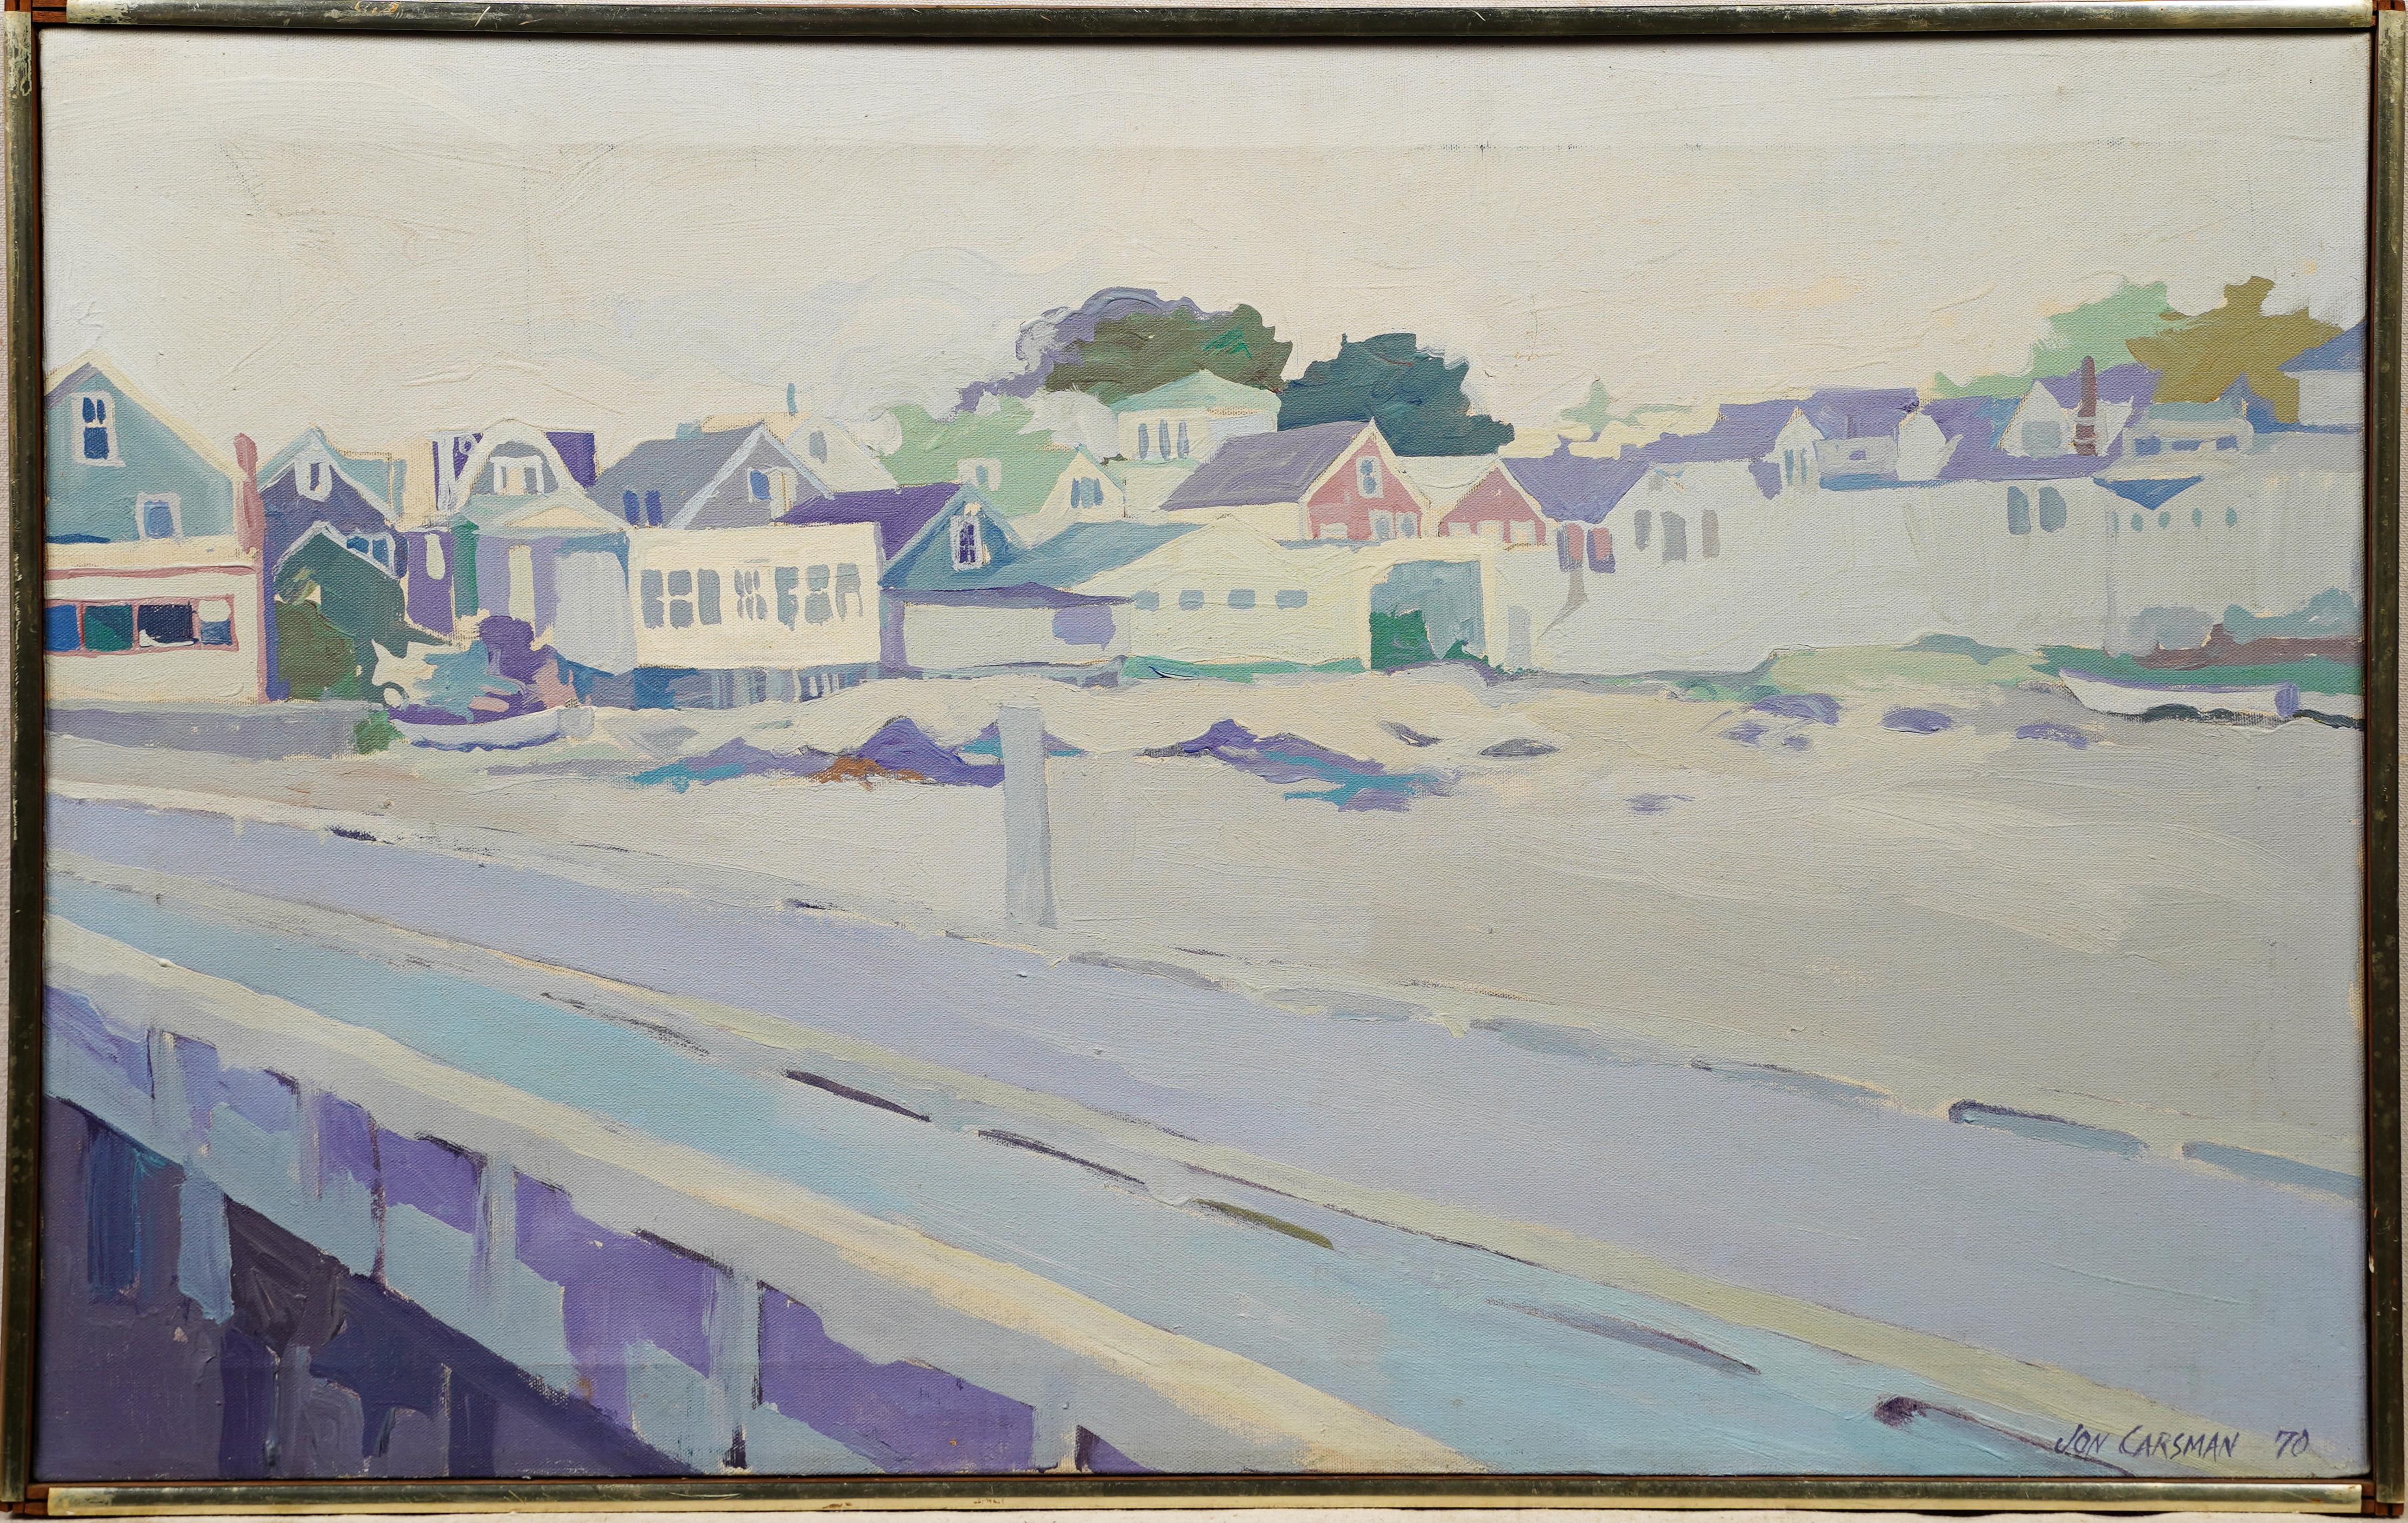 Jon Carsman  Landscape Painting –  New England Beach Town Fauvist Palette Modernist Gerahmte große Ölgemälde